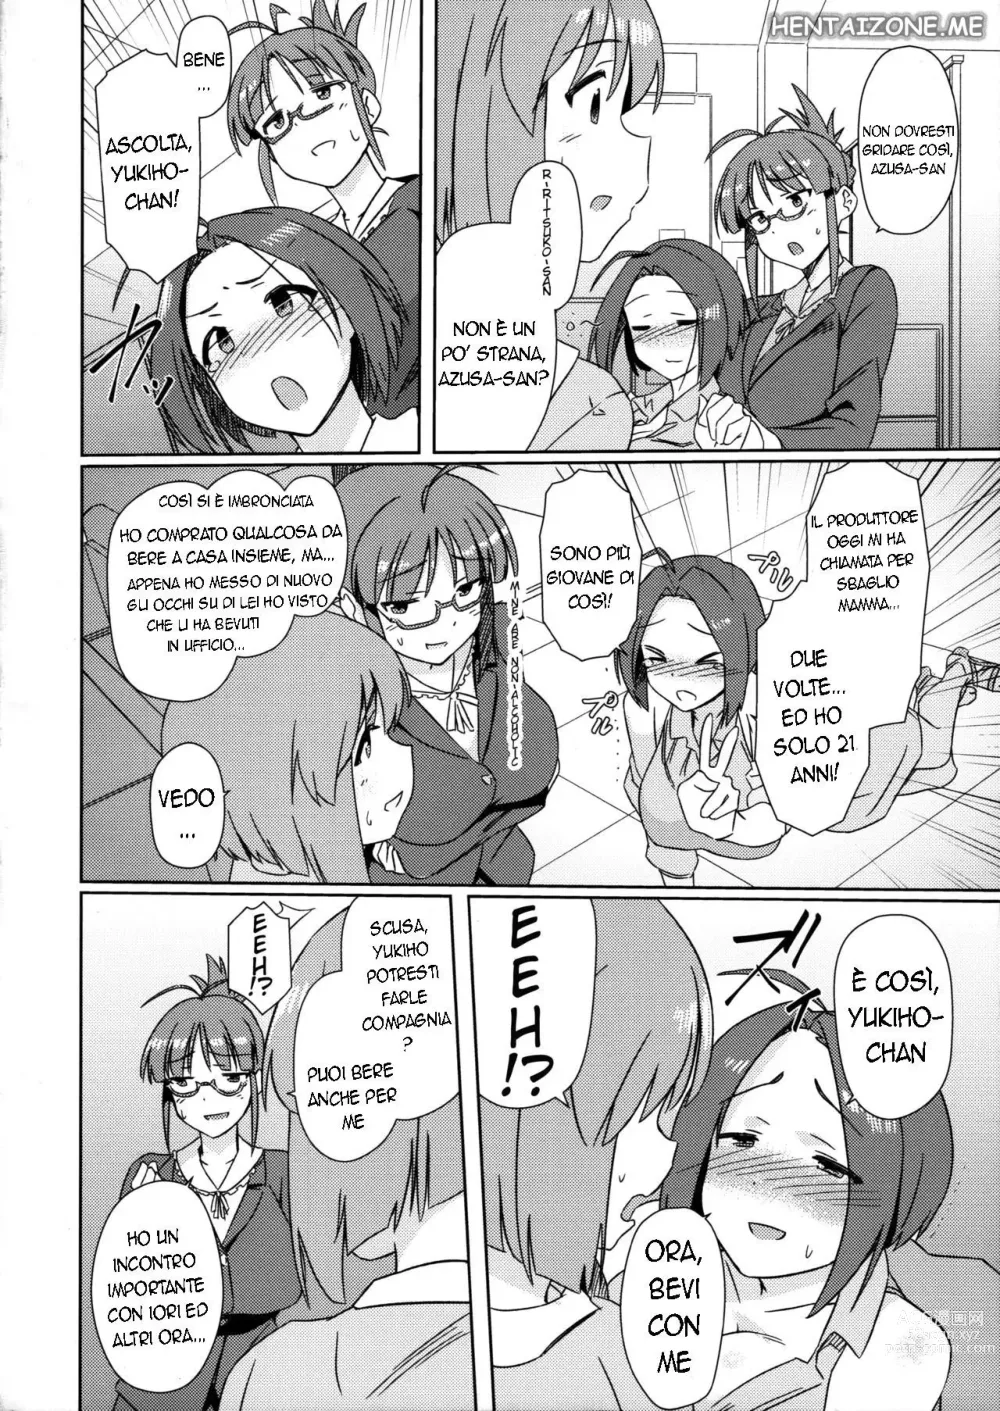 Page 3 of doujinshi Mi Prendera come Moglie